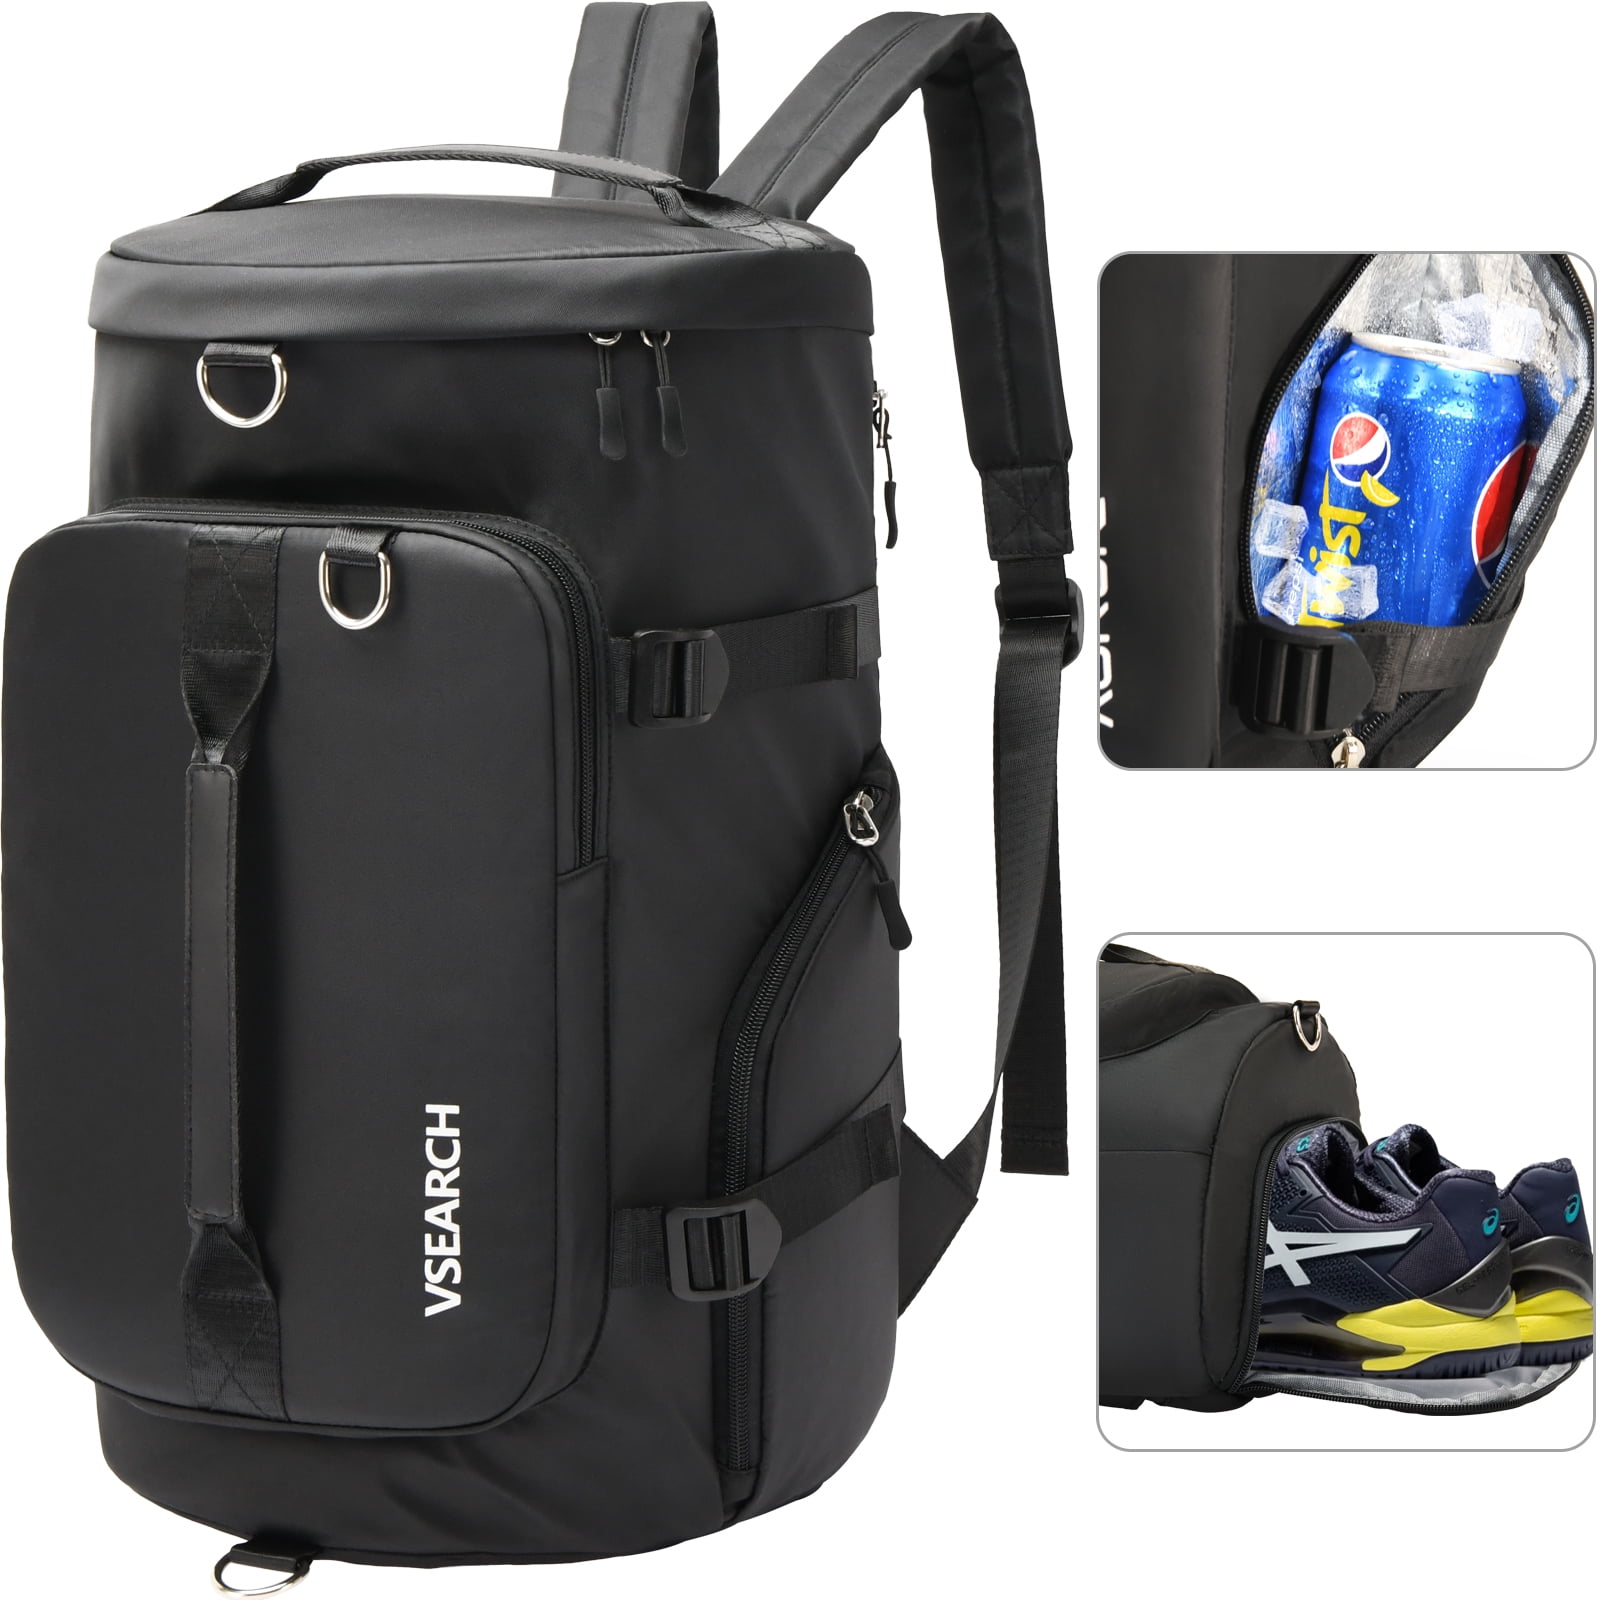 Adidas Unisex Side Bag - Gym Sports & Traveling Bag - (AT008)